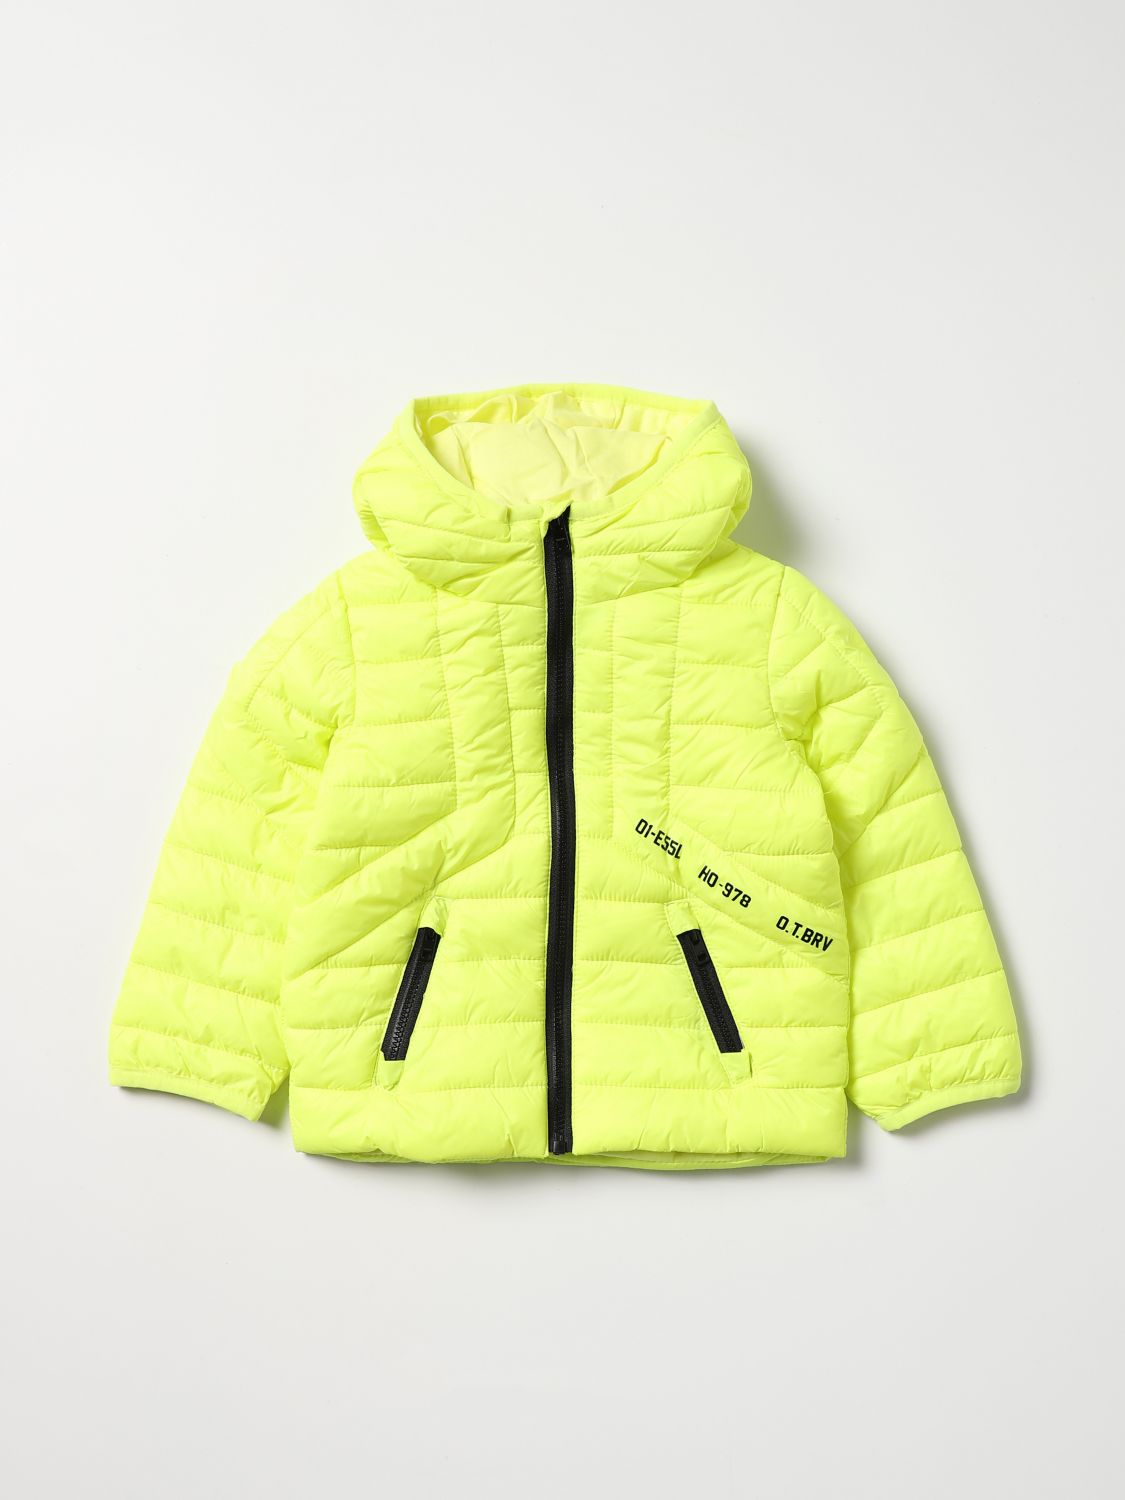 DIESEL: jacket for baby - Yellow | Diesel jacket K00169KXBBF online on ...